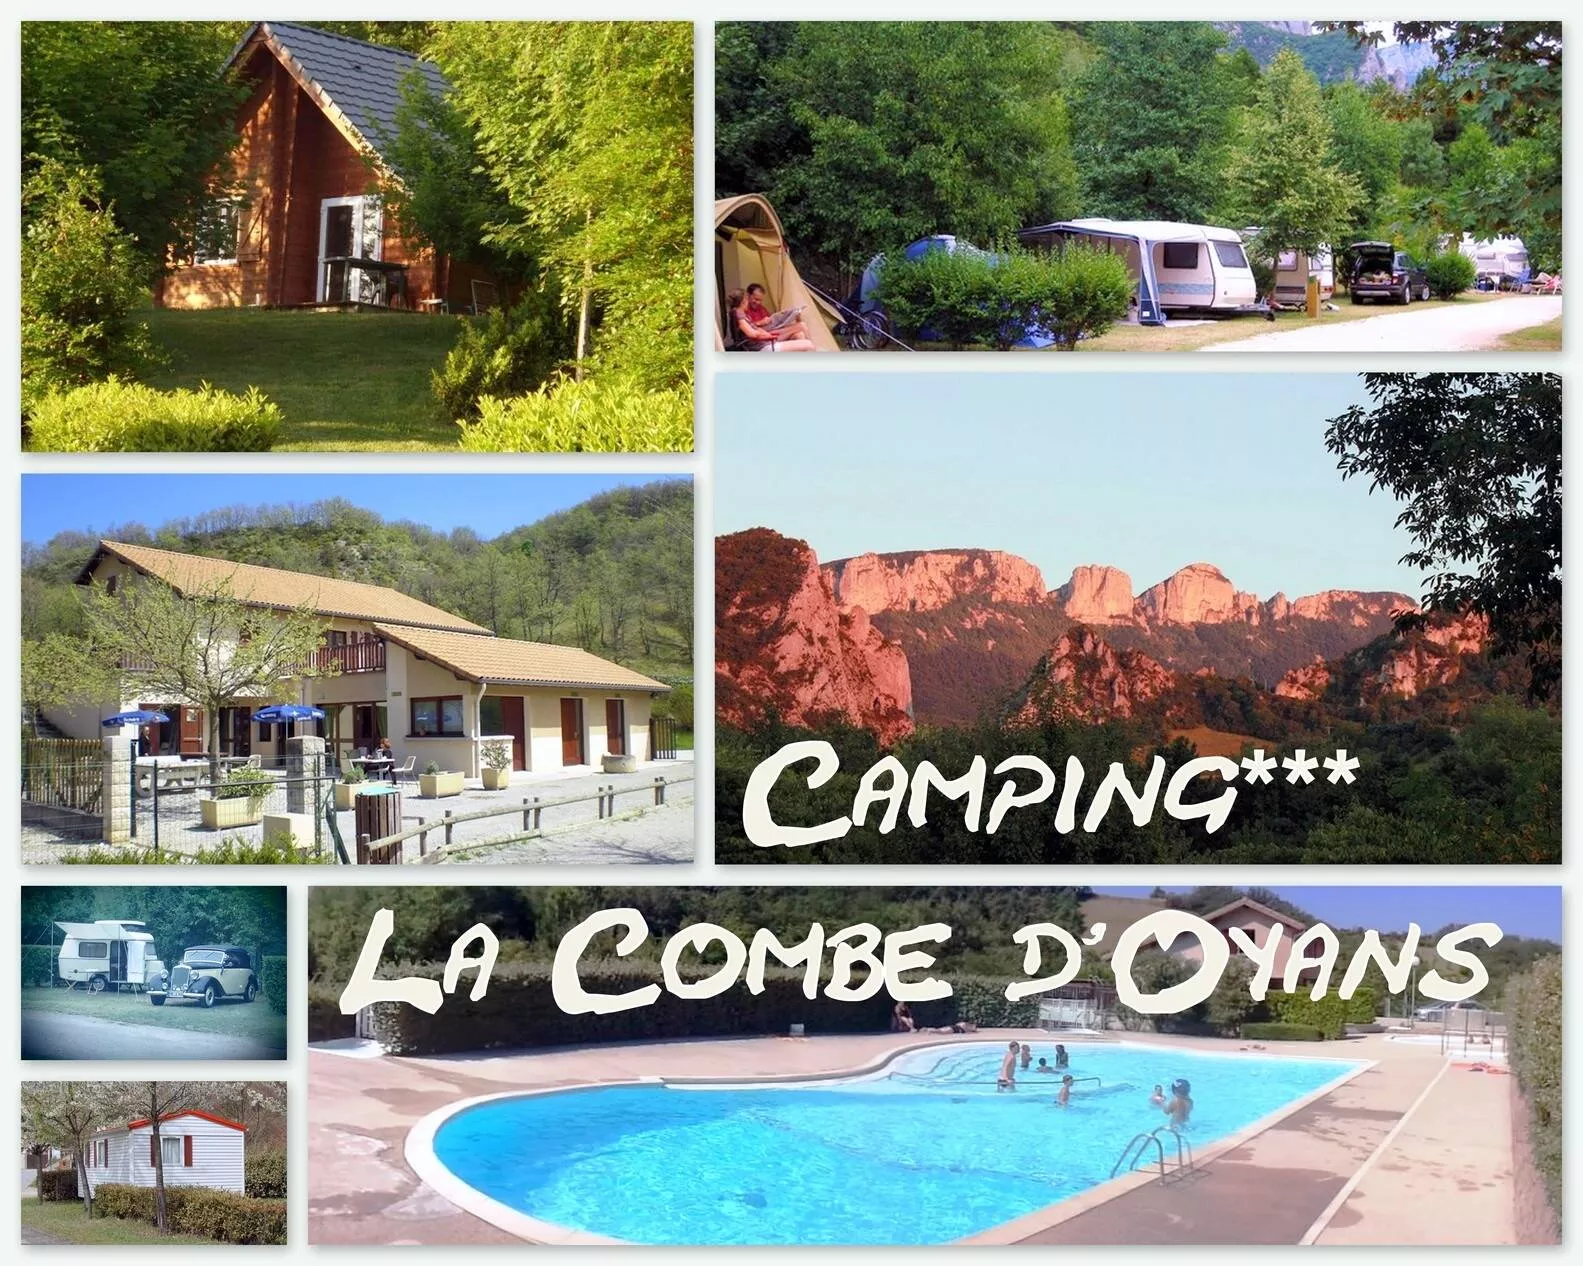 Camping La Combe dOyans 